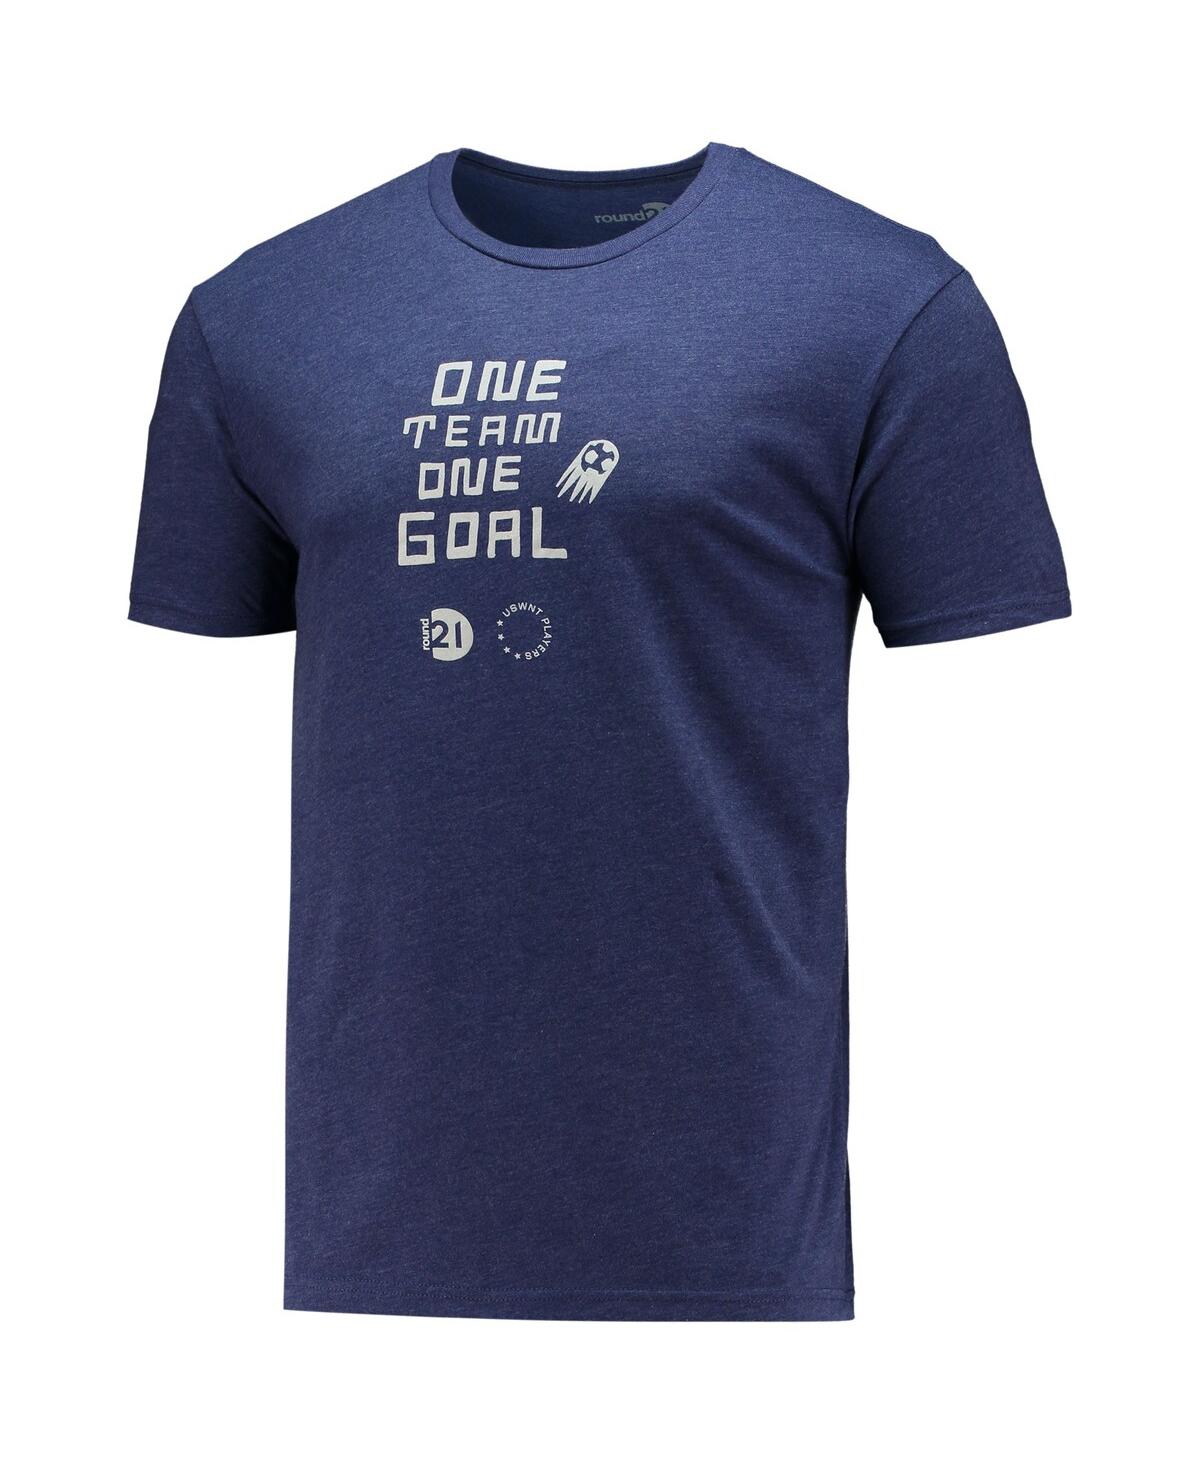 Shop Round21 Men's  Megan Rapinoe Navy Uswnt One Team One Goal T-shirt